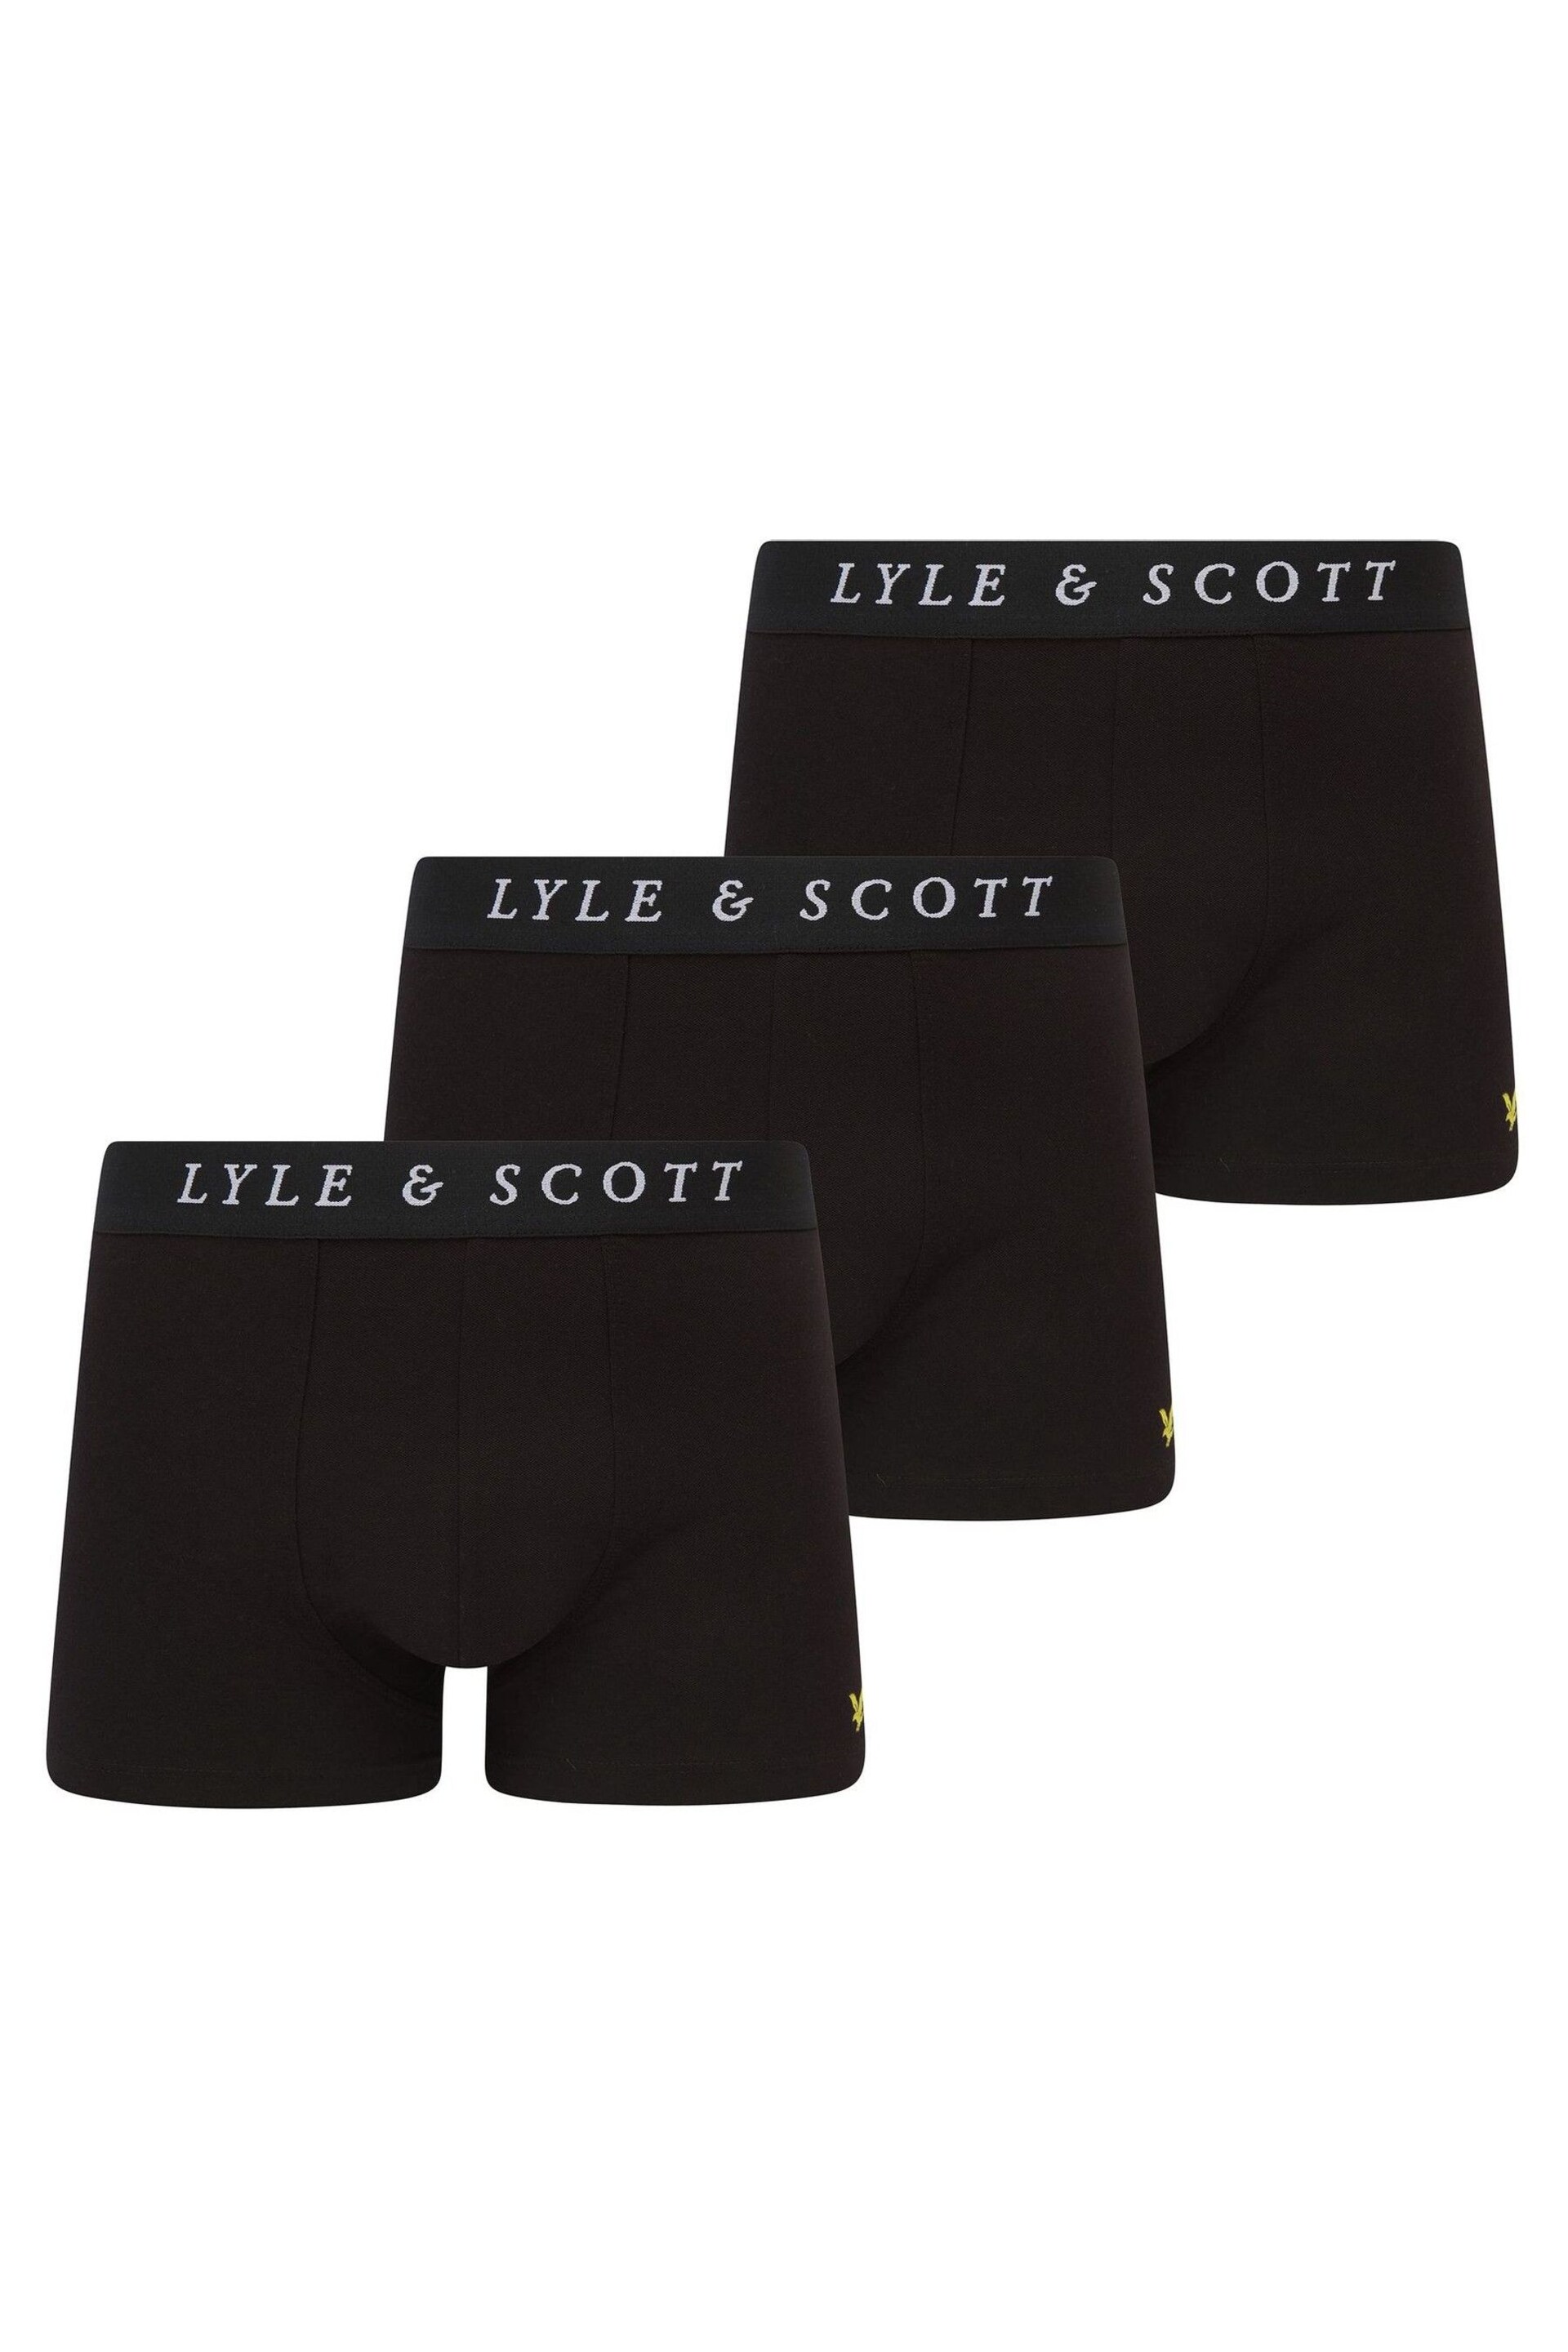 Lyle & Scott Black Underwear Trunks 3 Pack - Image 1 of 2